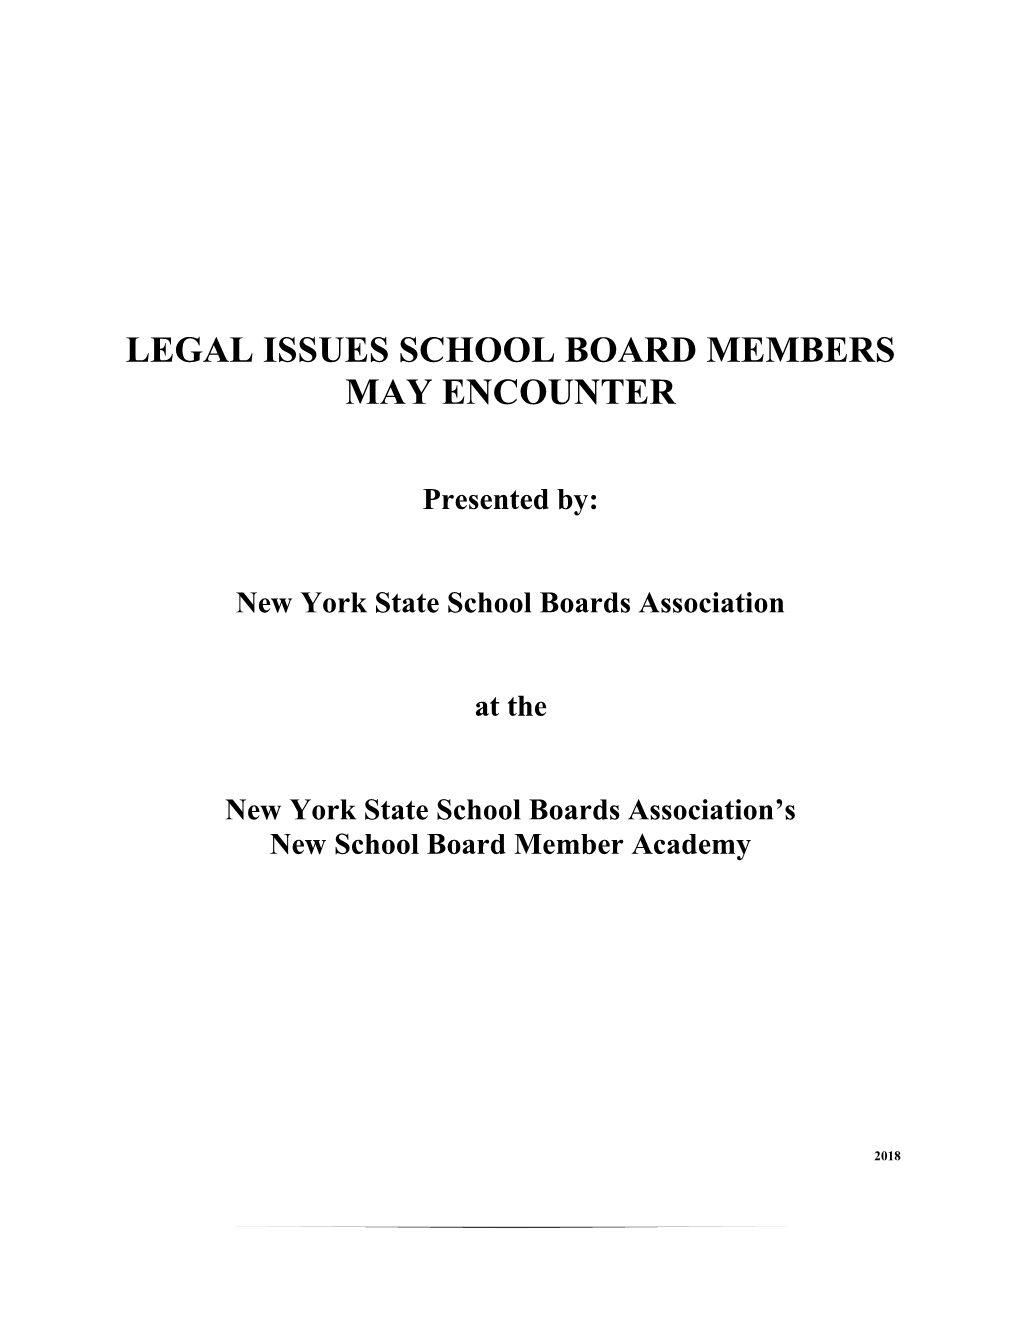 Legal Issues School Board Members May Encounter